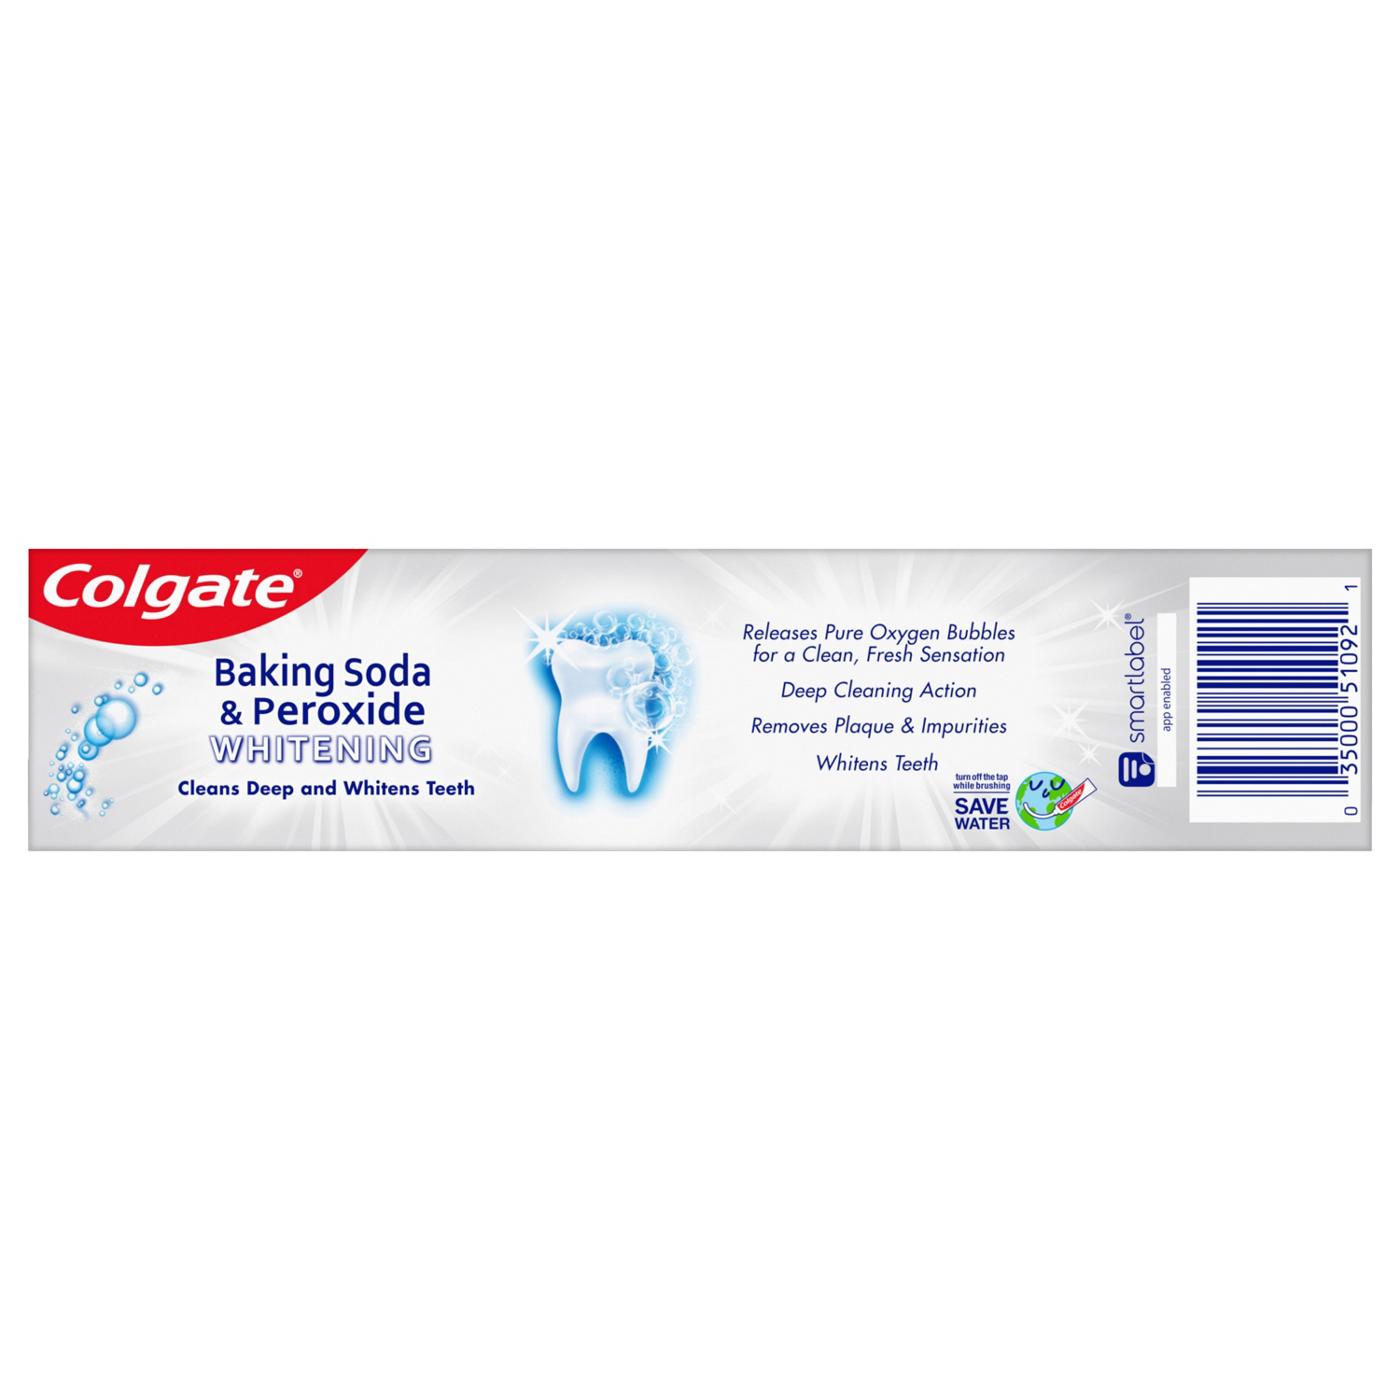 Colgate Baking Soda & Peroxide Whitening Anticavity Toothpaste - Brisk Mint; image 2 of 3